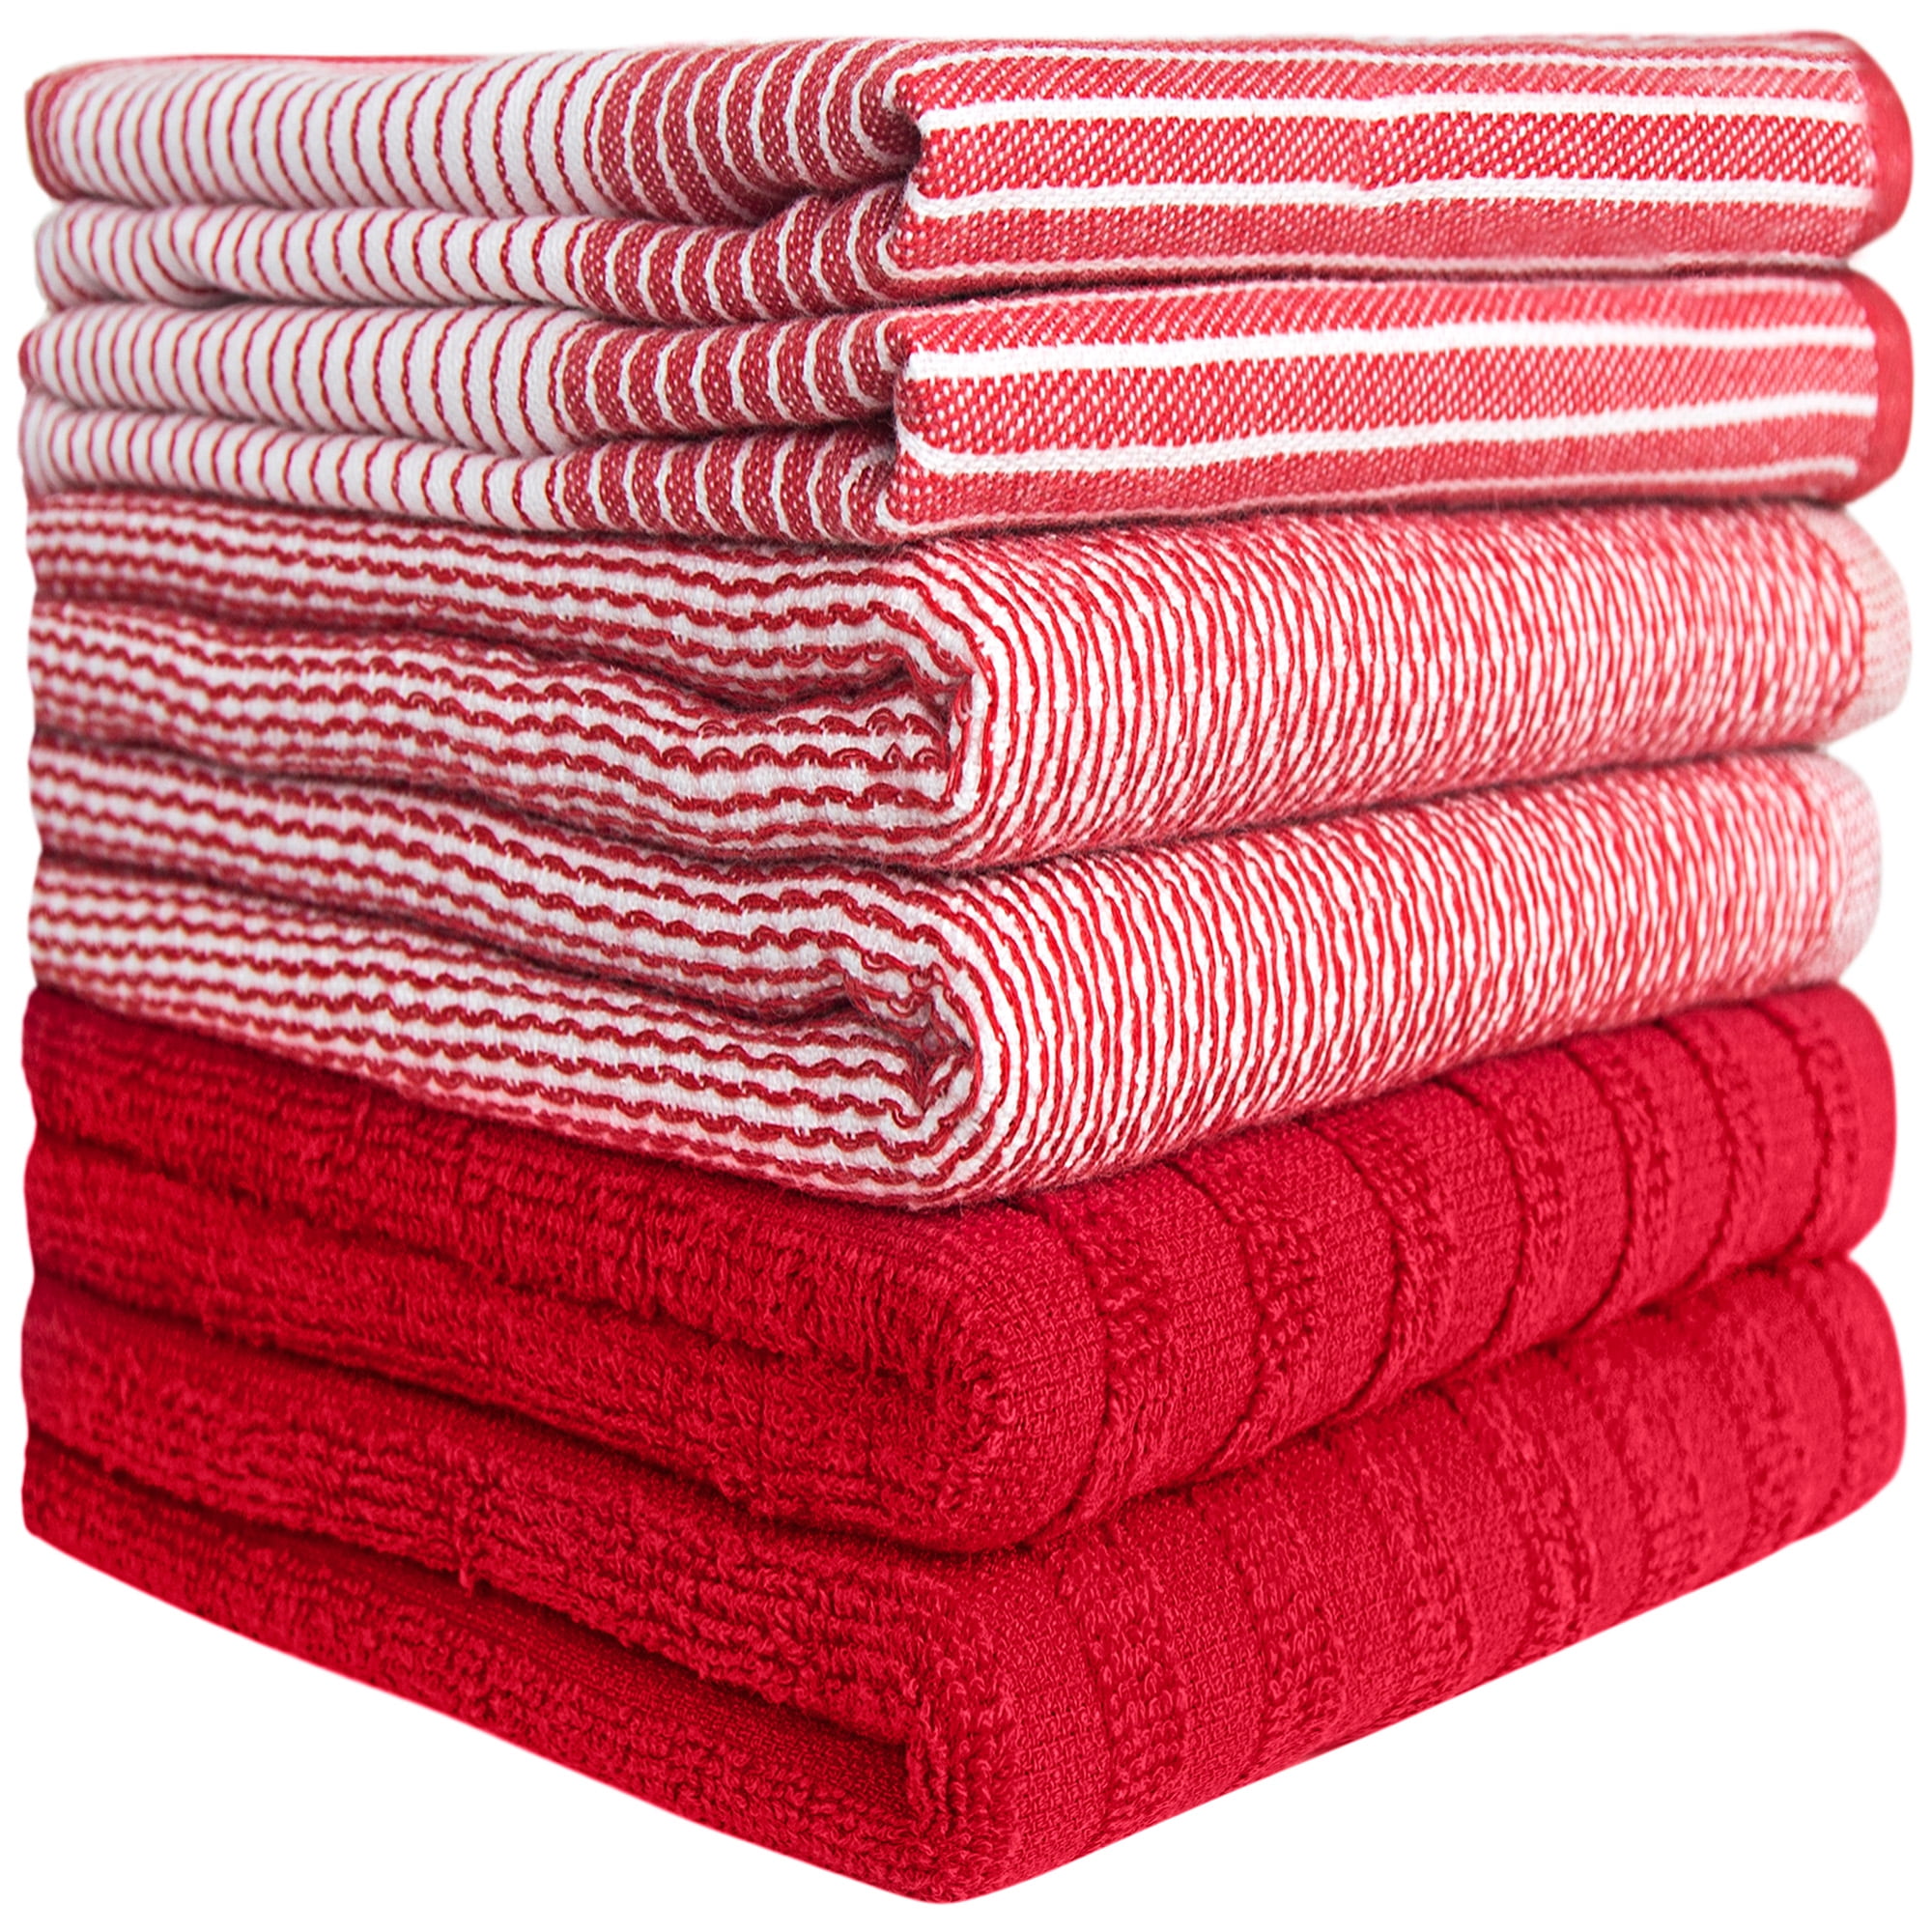 Americana Plaid Tea Towel Pair 20 x 28 Dish Towels Navy Plaid Dish Towel